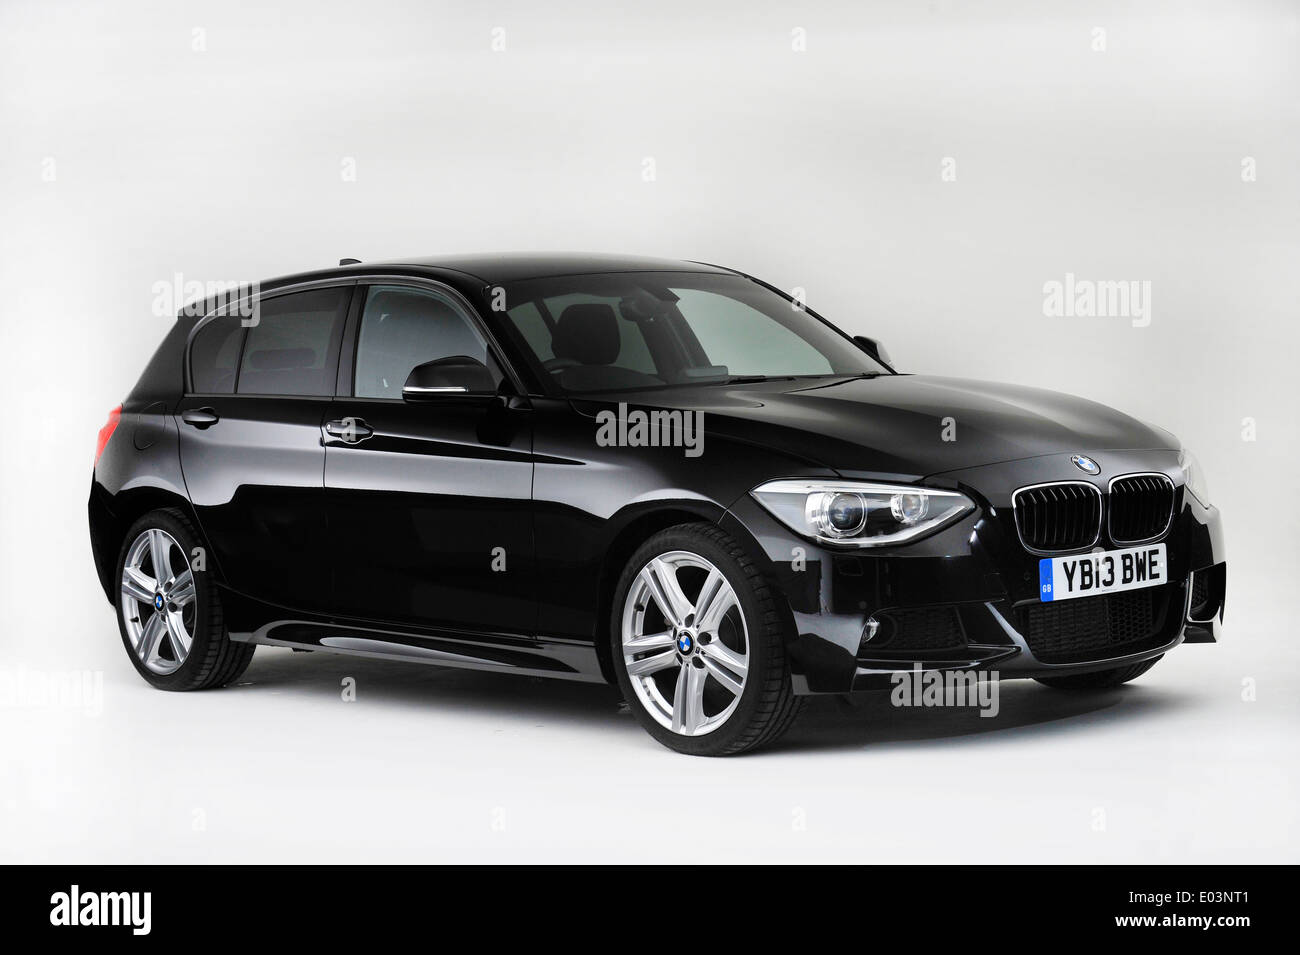 2013 BMW 118d Stock Photo